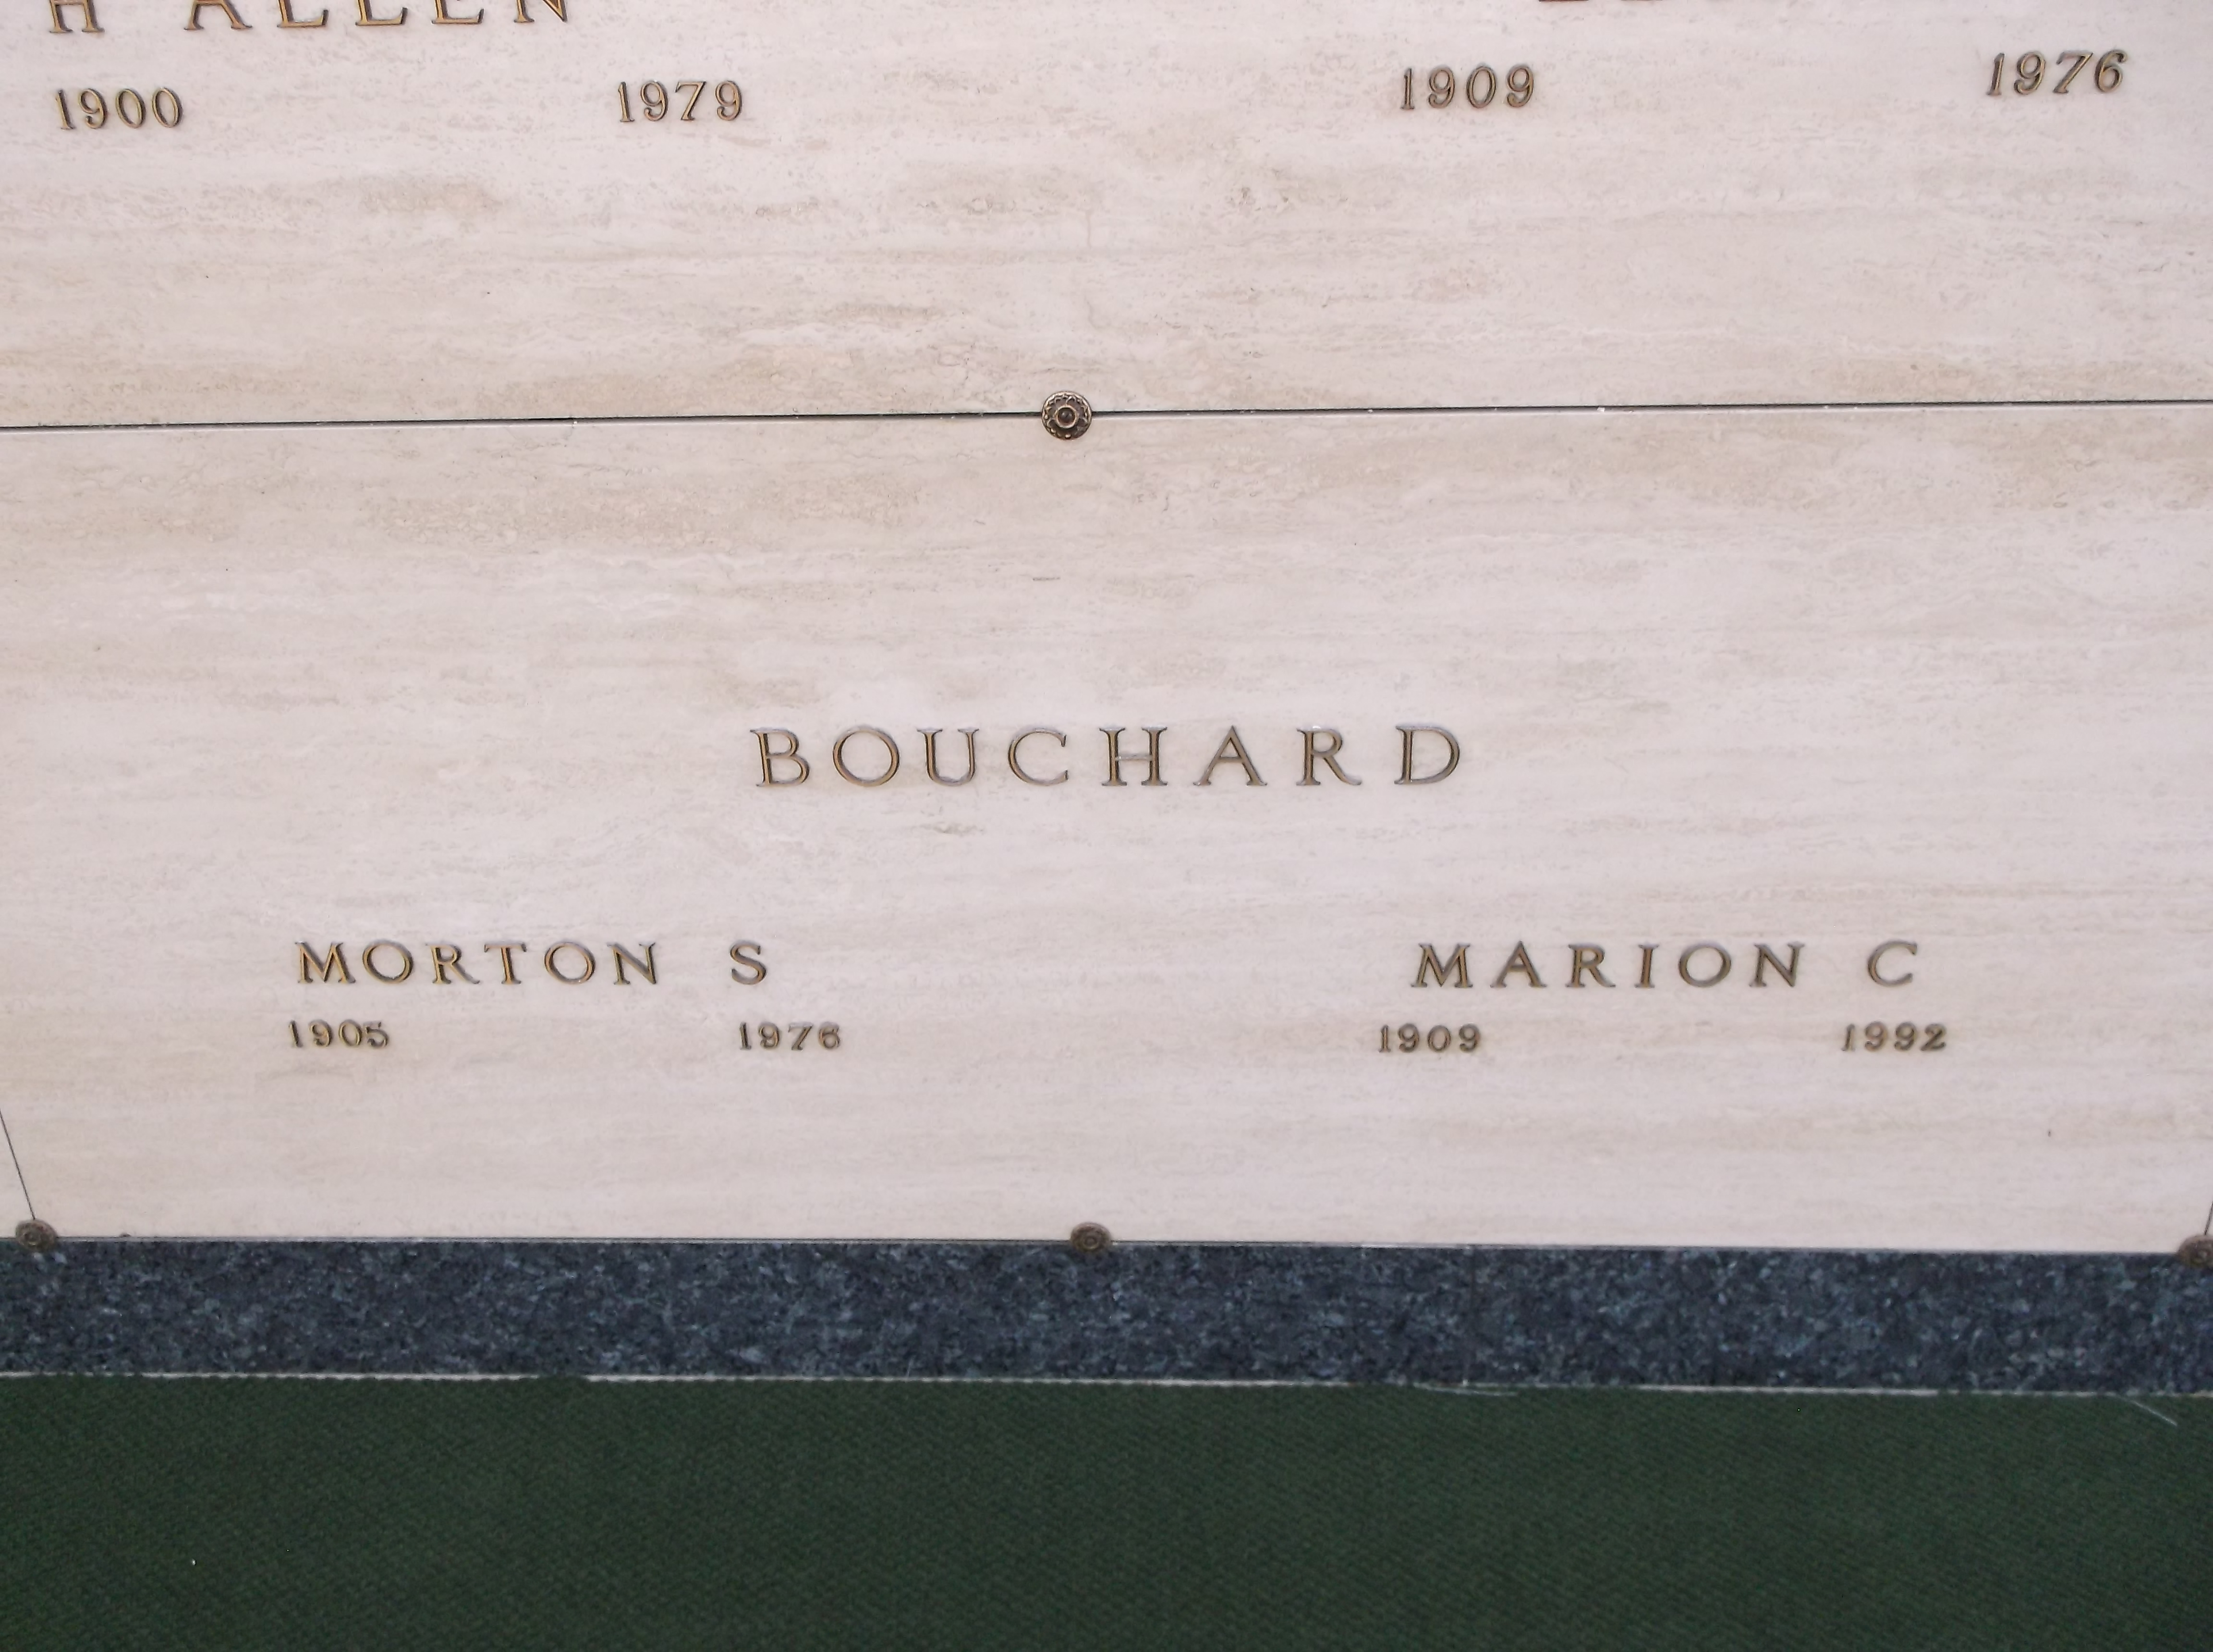 Morton S Bouchard